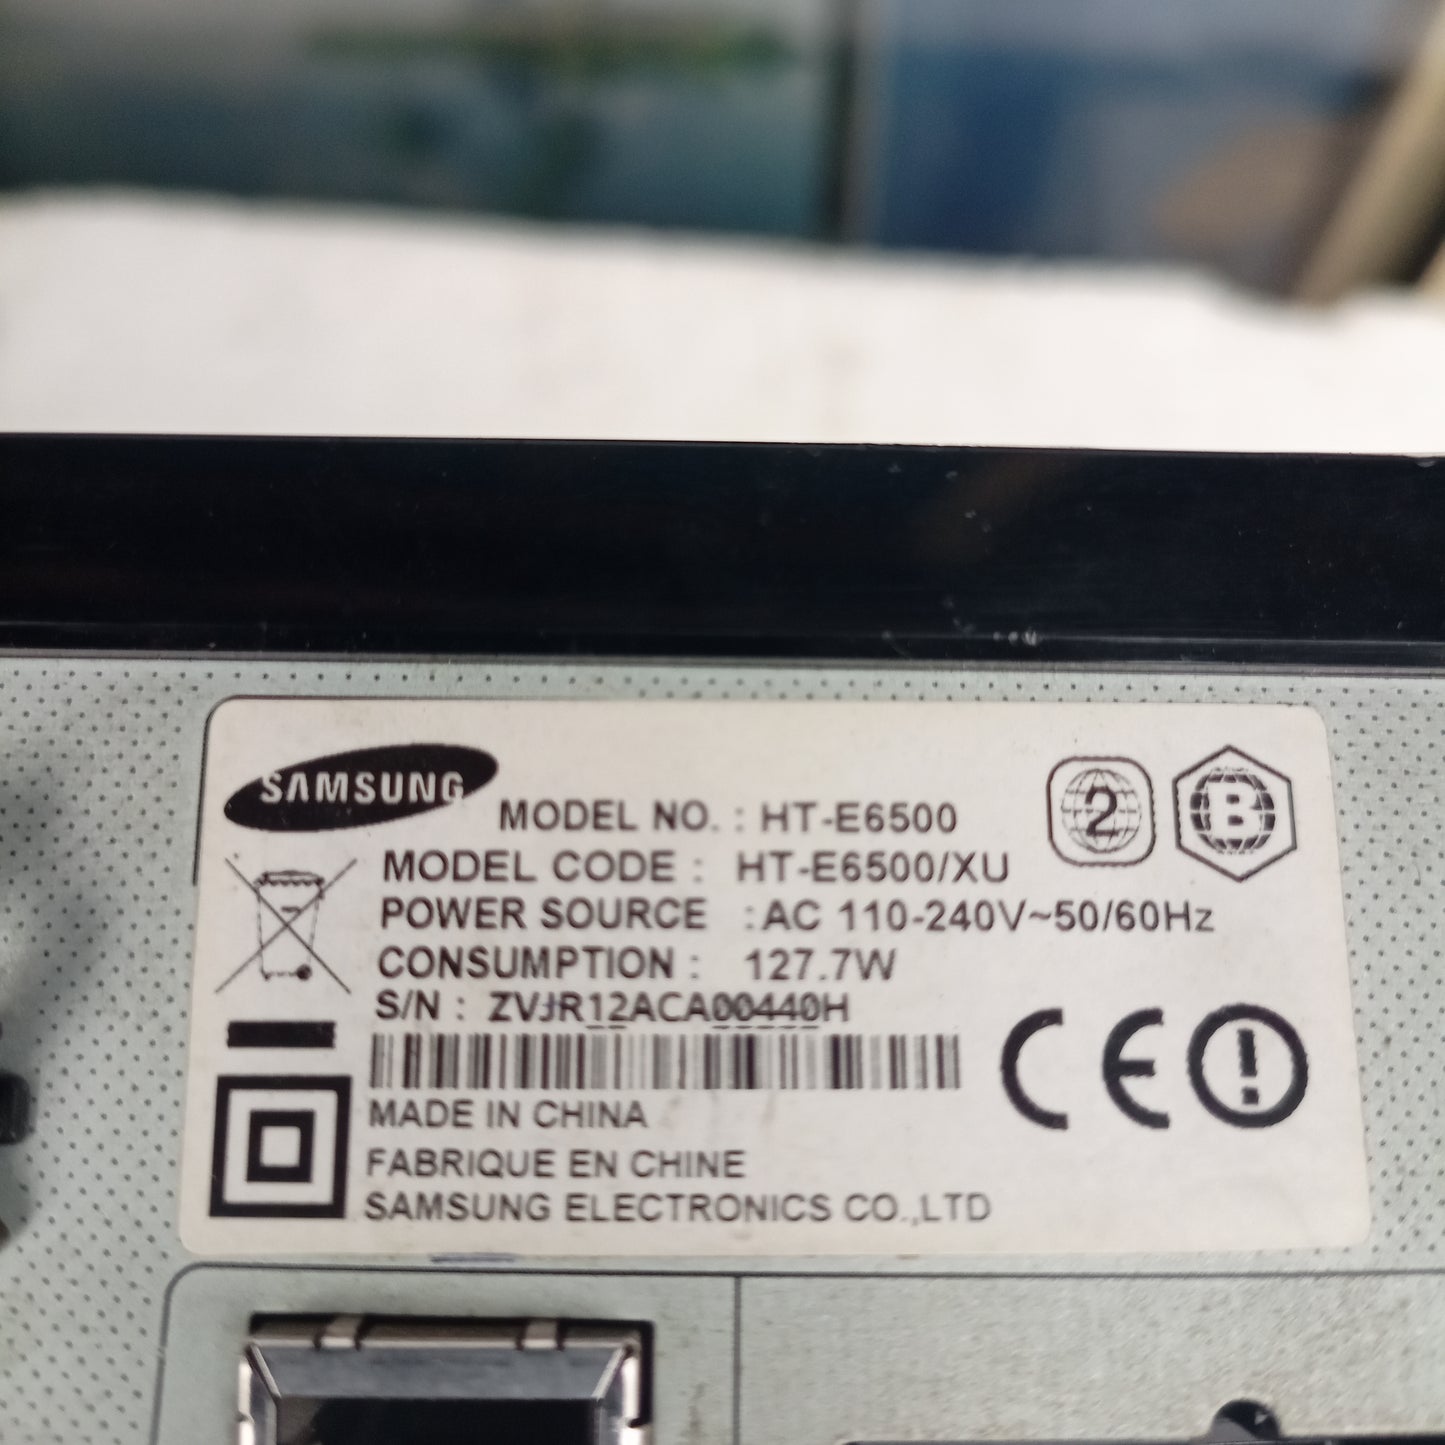 Samsung HT-E6500 5.1Ch 1330watts Blu-ray 3D Smart Home Theater Machine Head - Model number